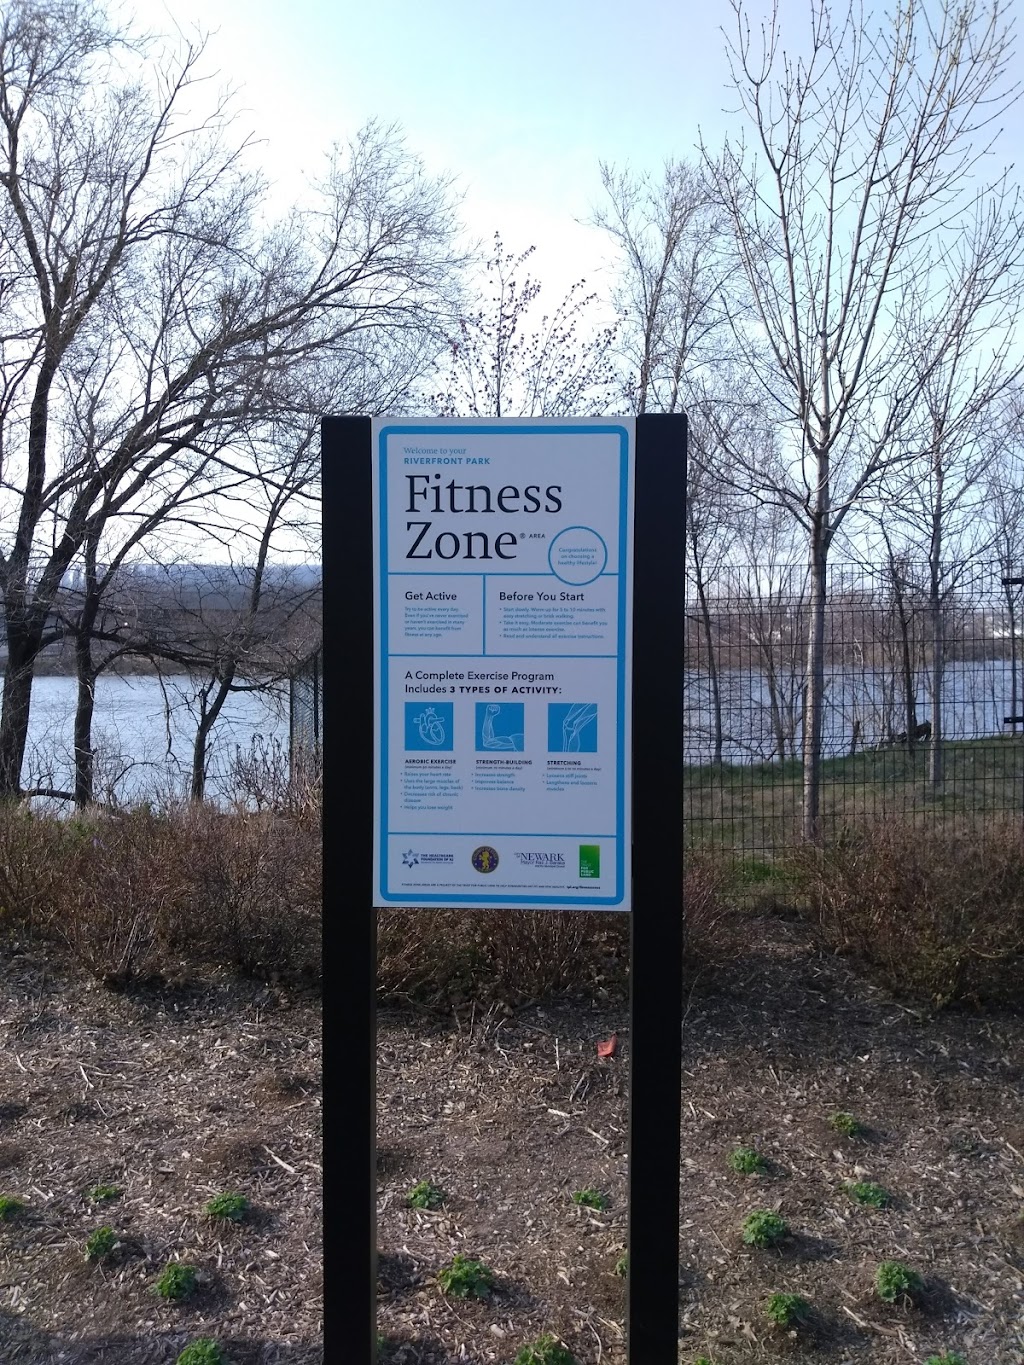 Fitness Zone - Newark Riverfront Park | 87G7PVM3+C7 635, 5, Raymond Blvd, Newark, NJ 07105 | Phone: (201) 341-8311